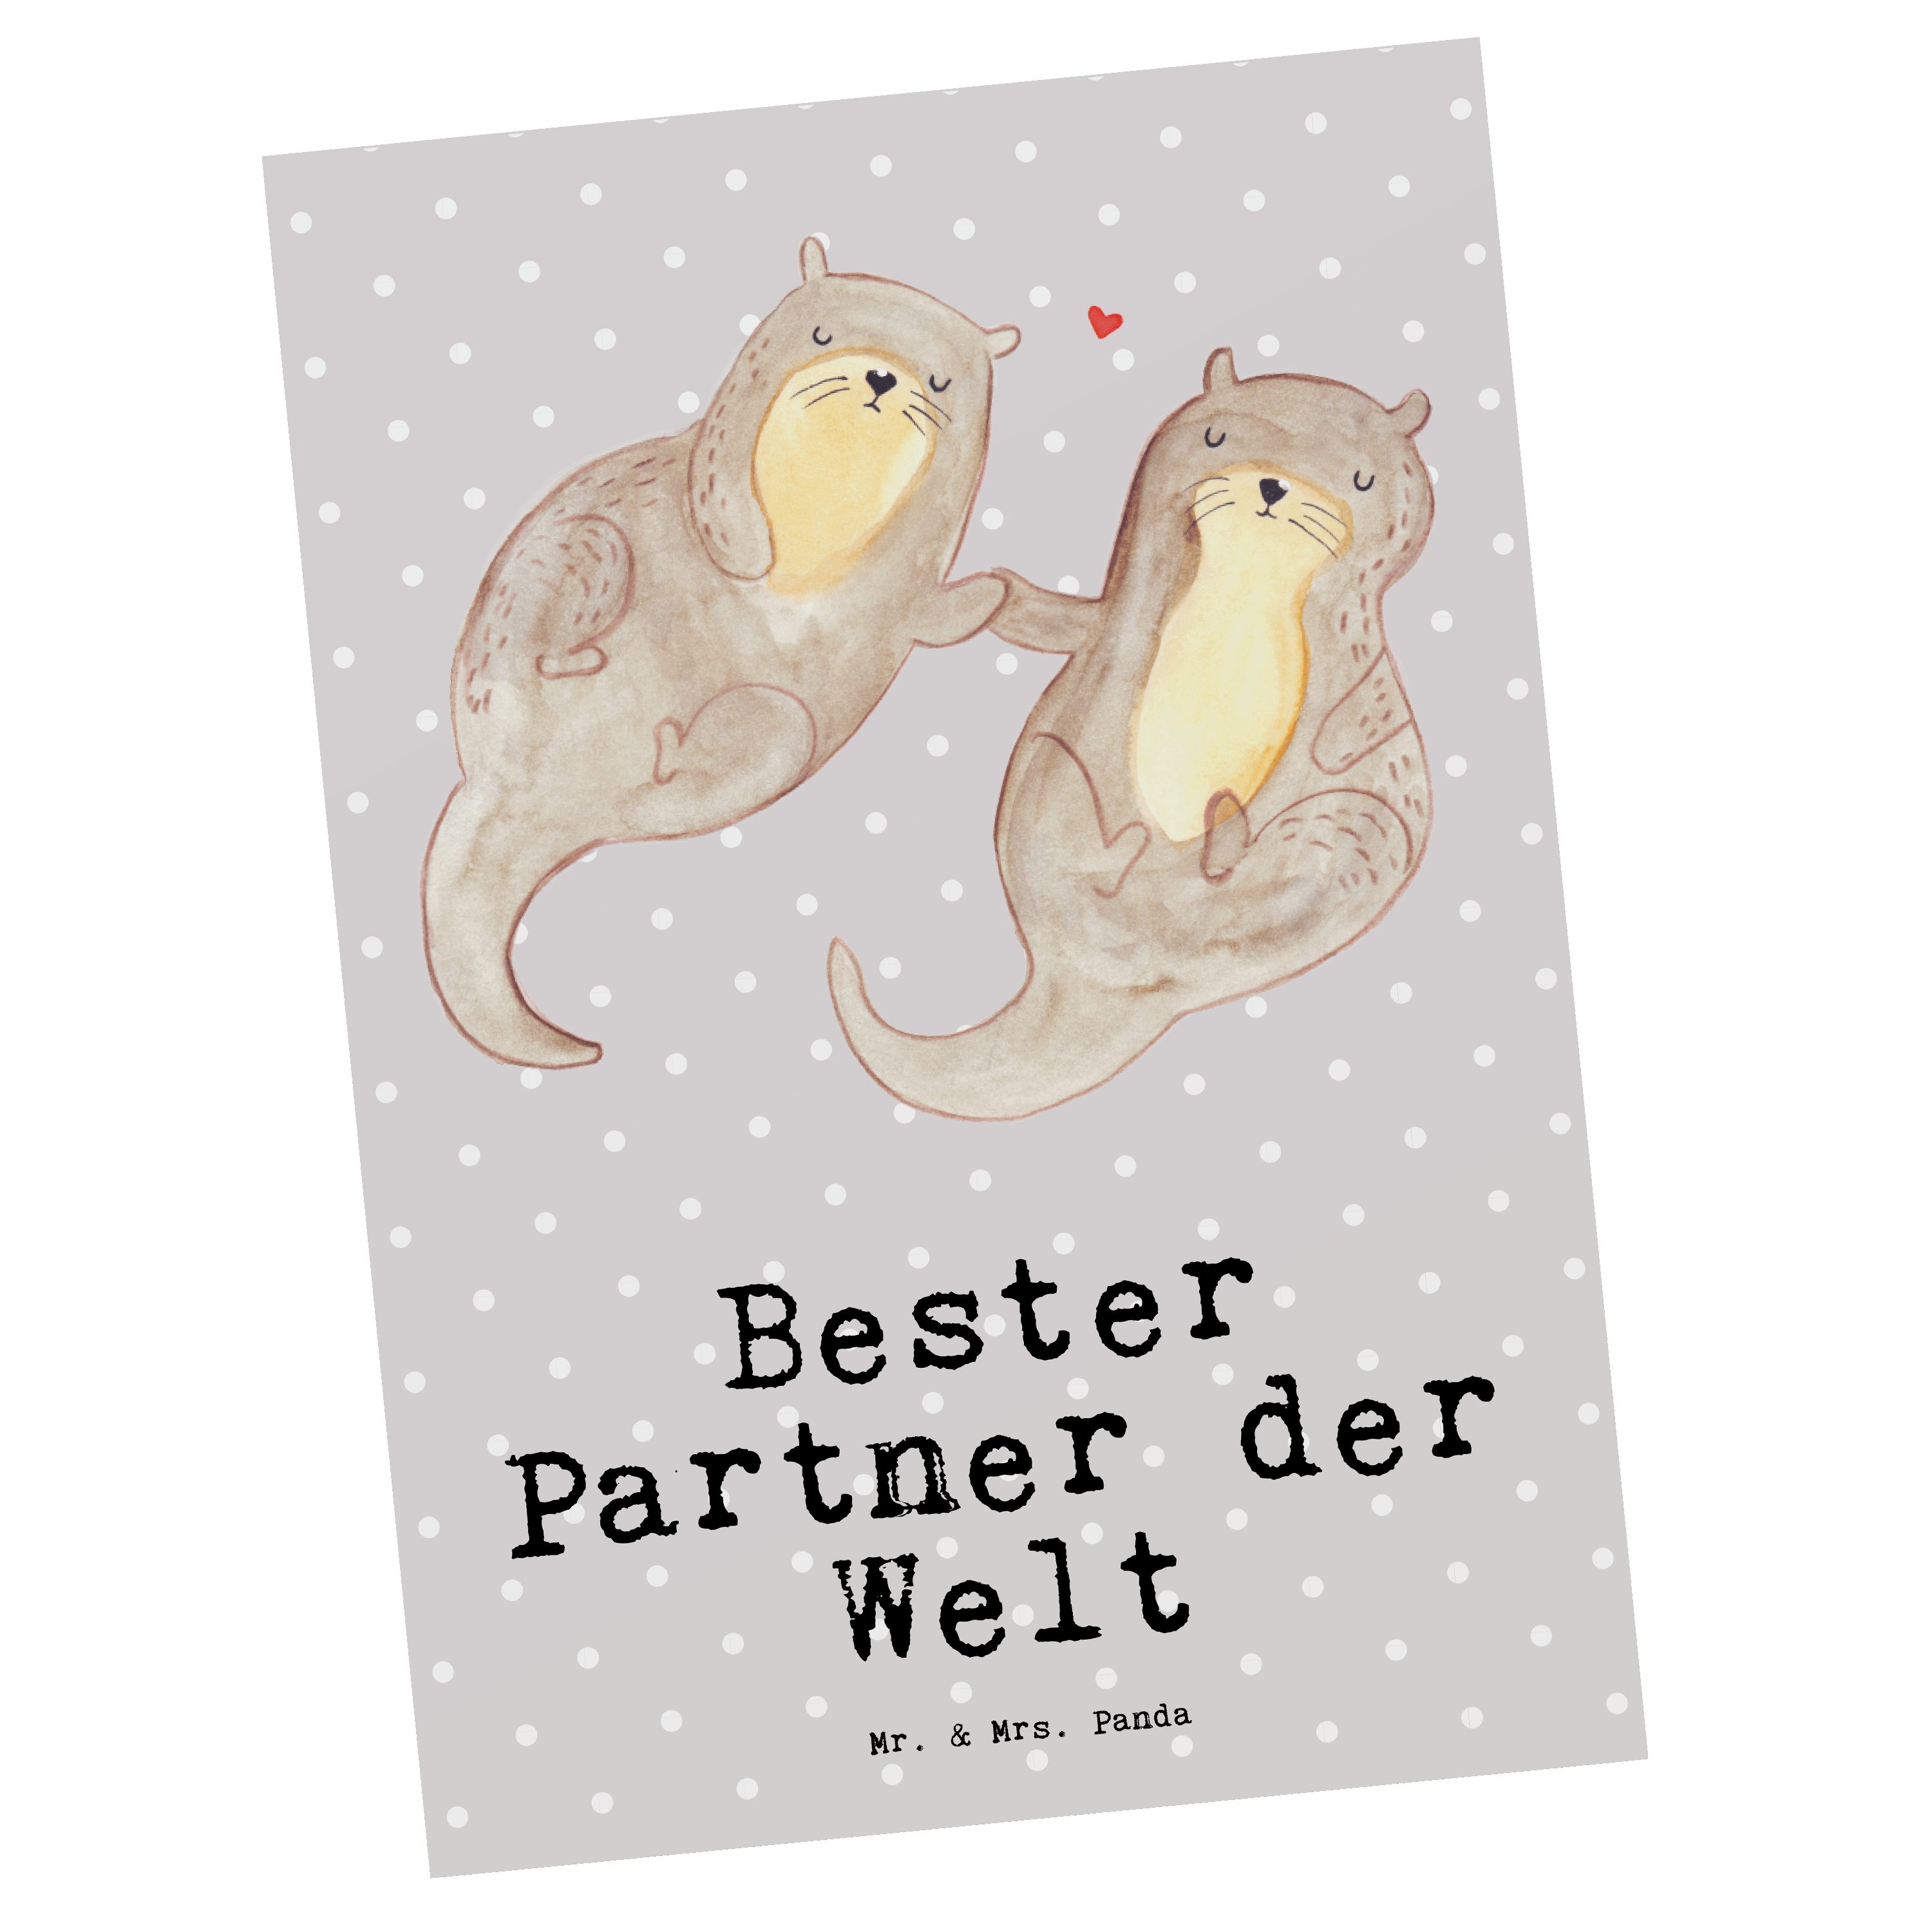 Mr. & Mrs. Panda Postkarte Otter Bester Partner der Welt - Grau Pastell - Geschenk, Grußkarte, G